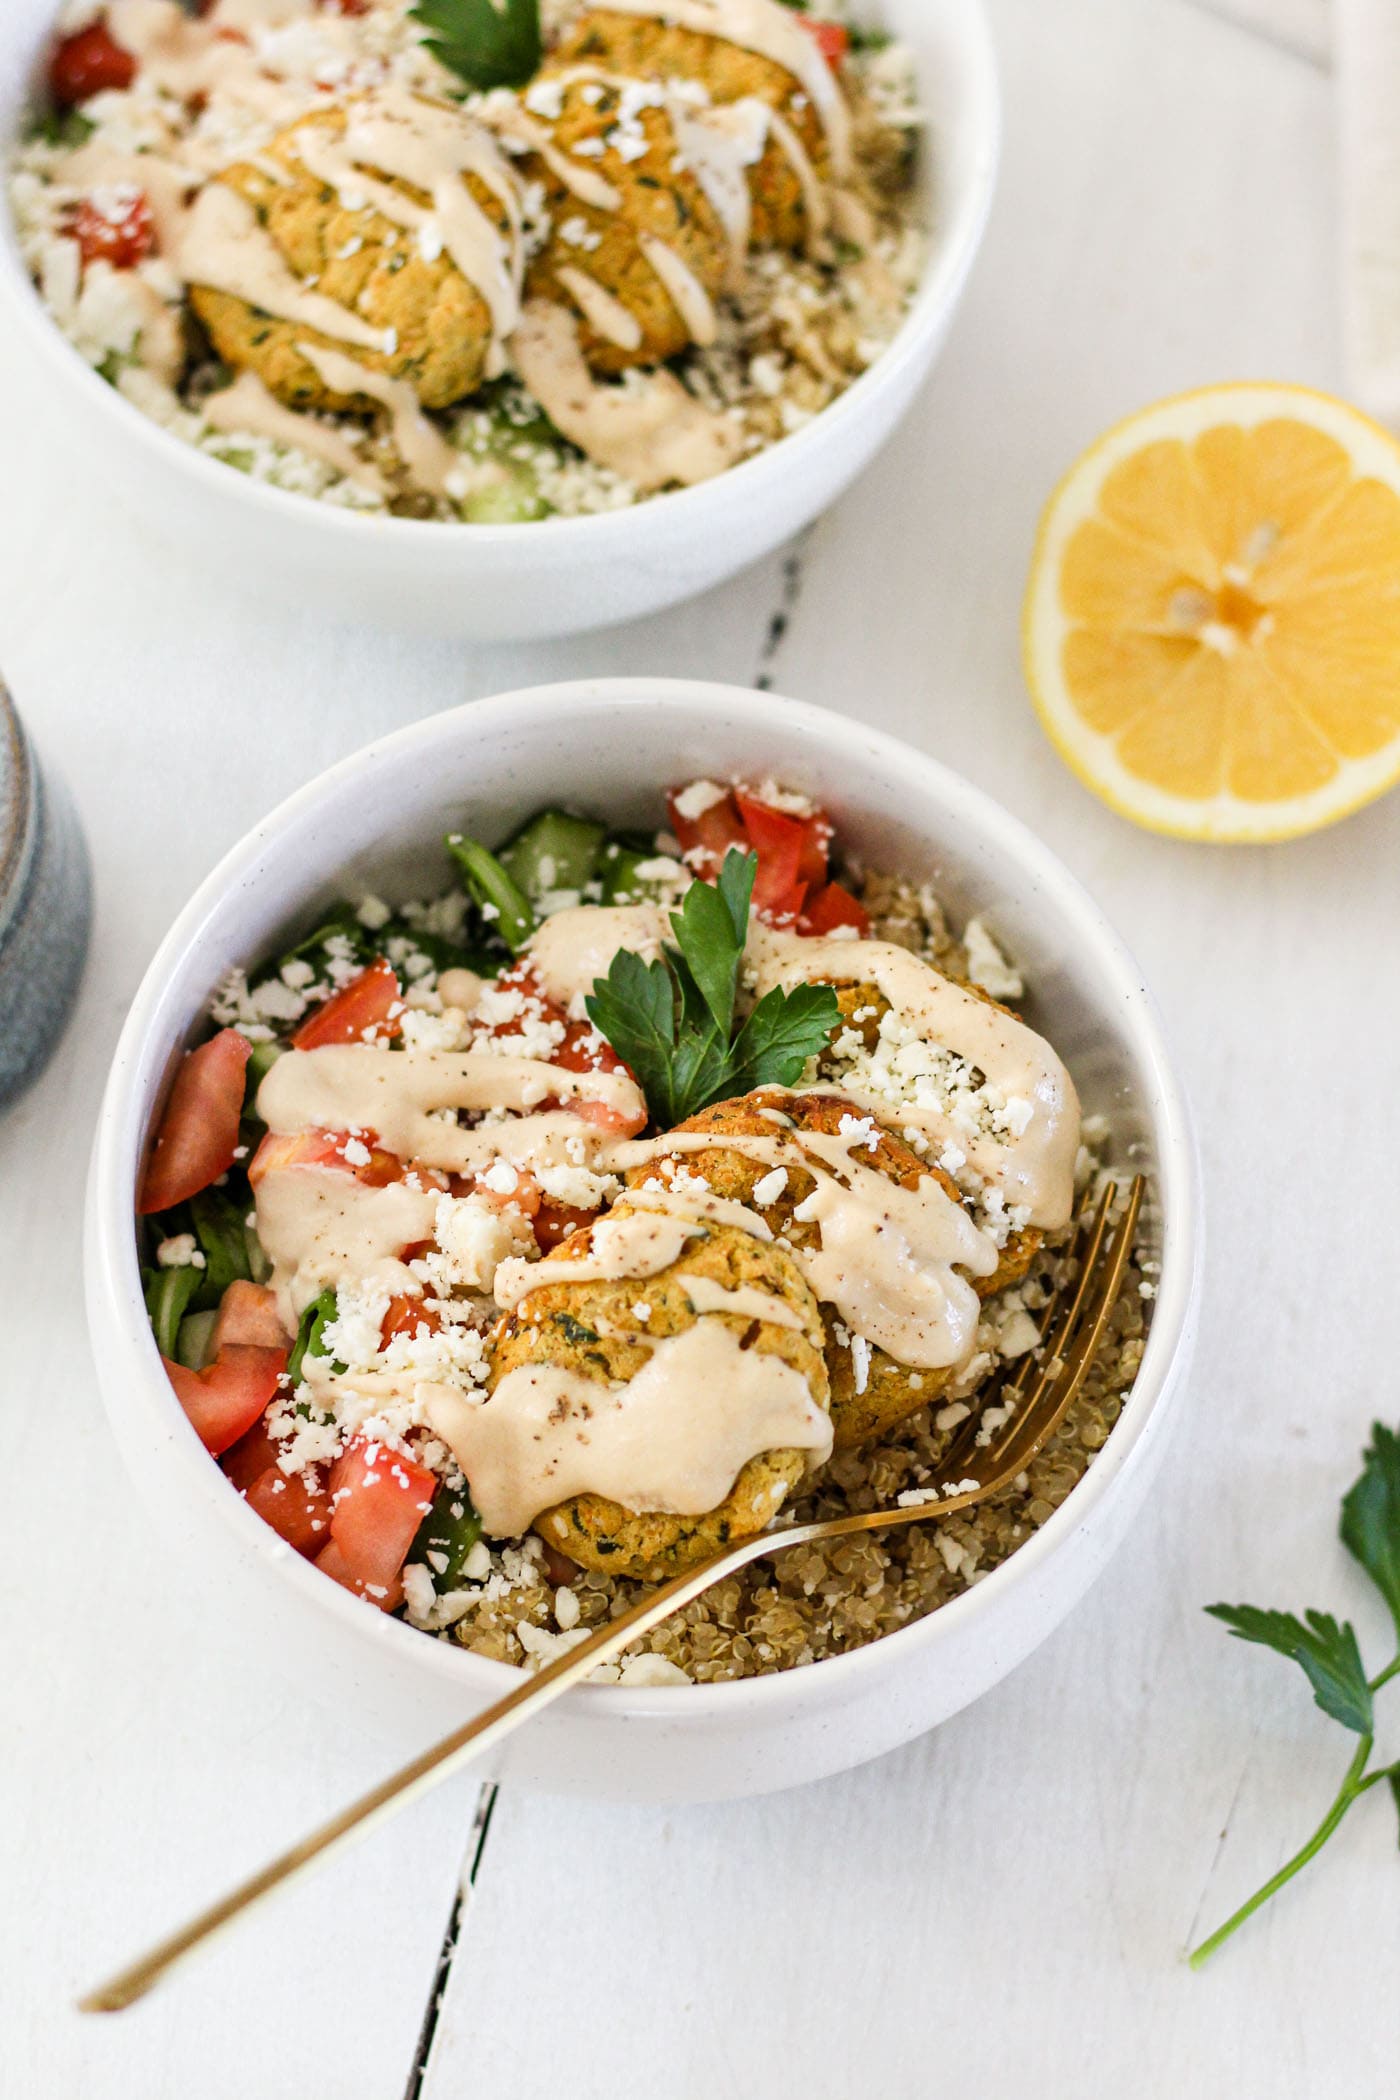 falafel bowls with vegetables, quinoa and lemon tahini sauce